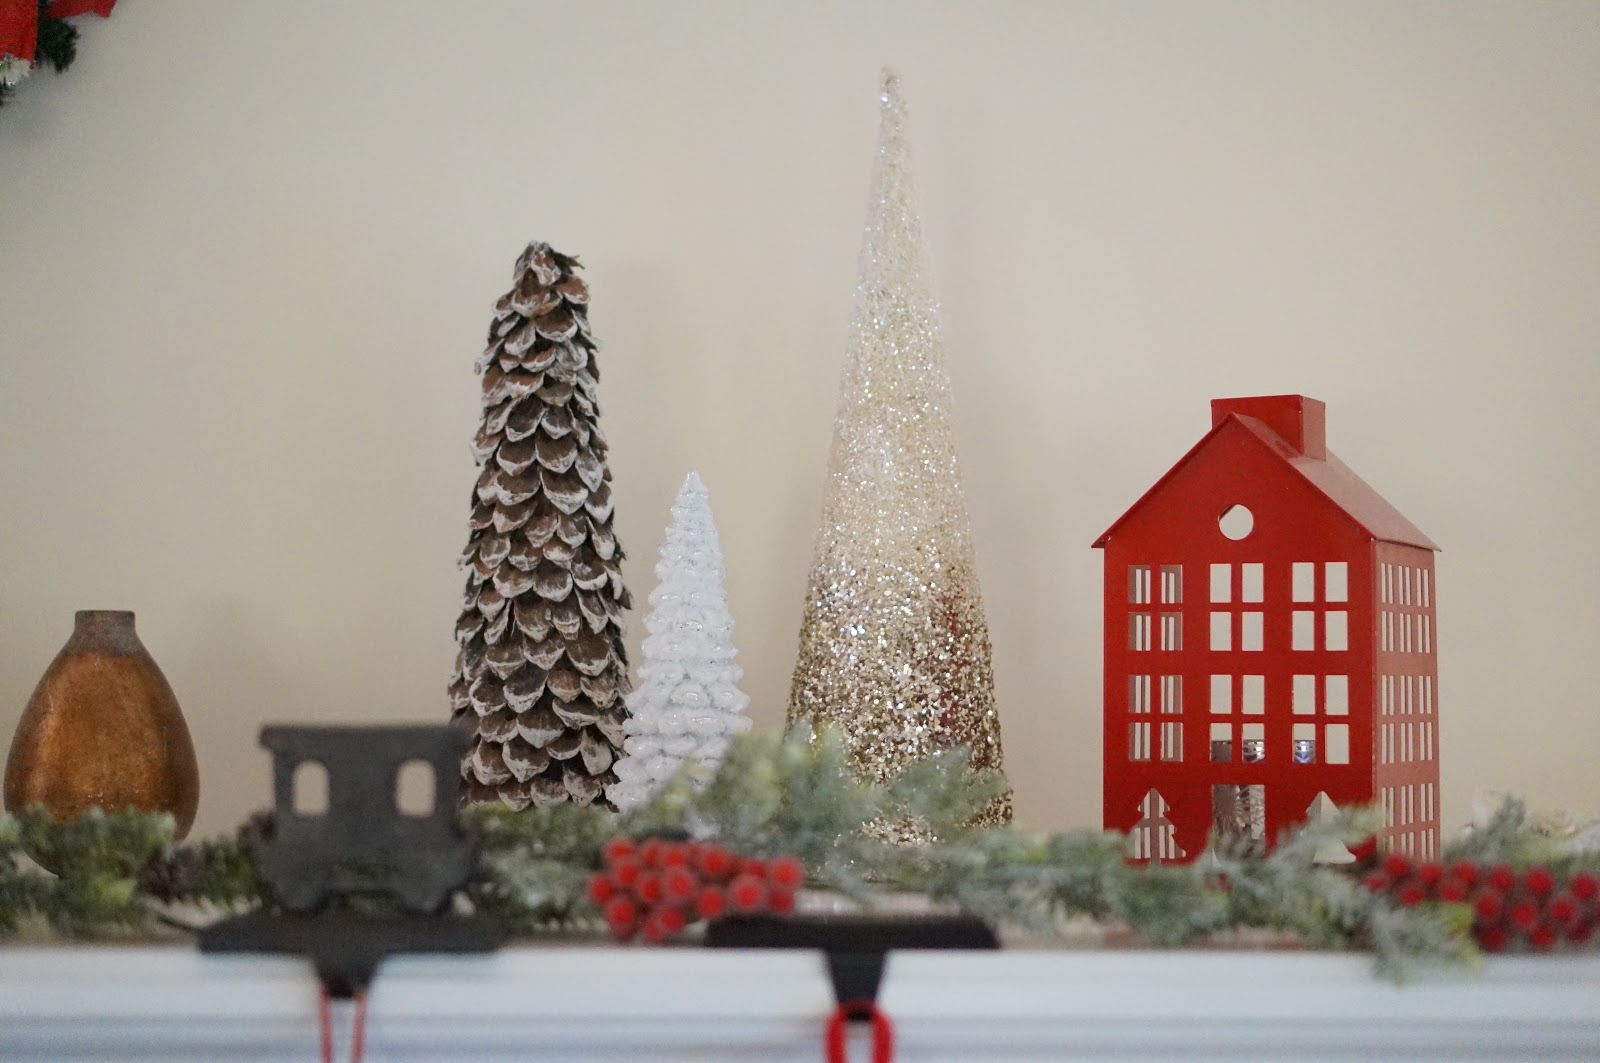 MINI HOME TOUR | CHRISTMAS HOME DECOR IDEAS by North Caroline style blogger Rebecca Lately